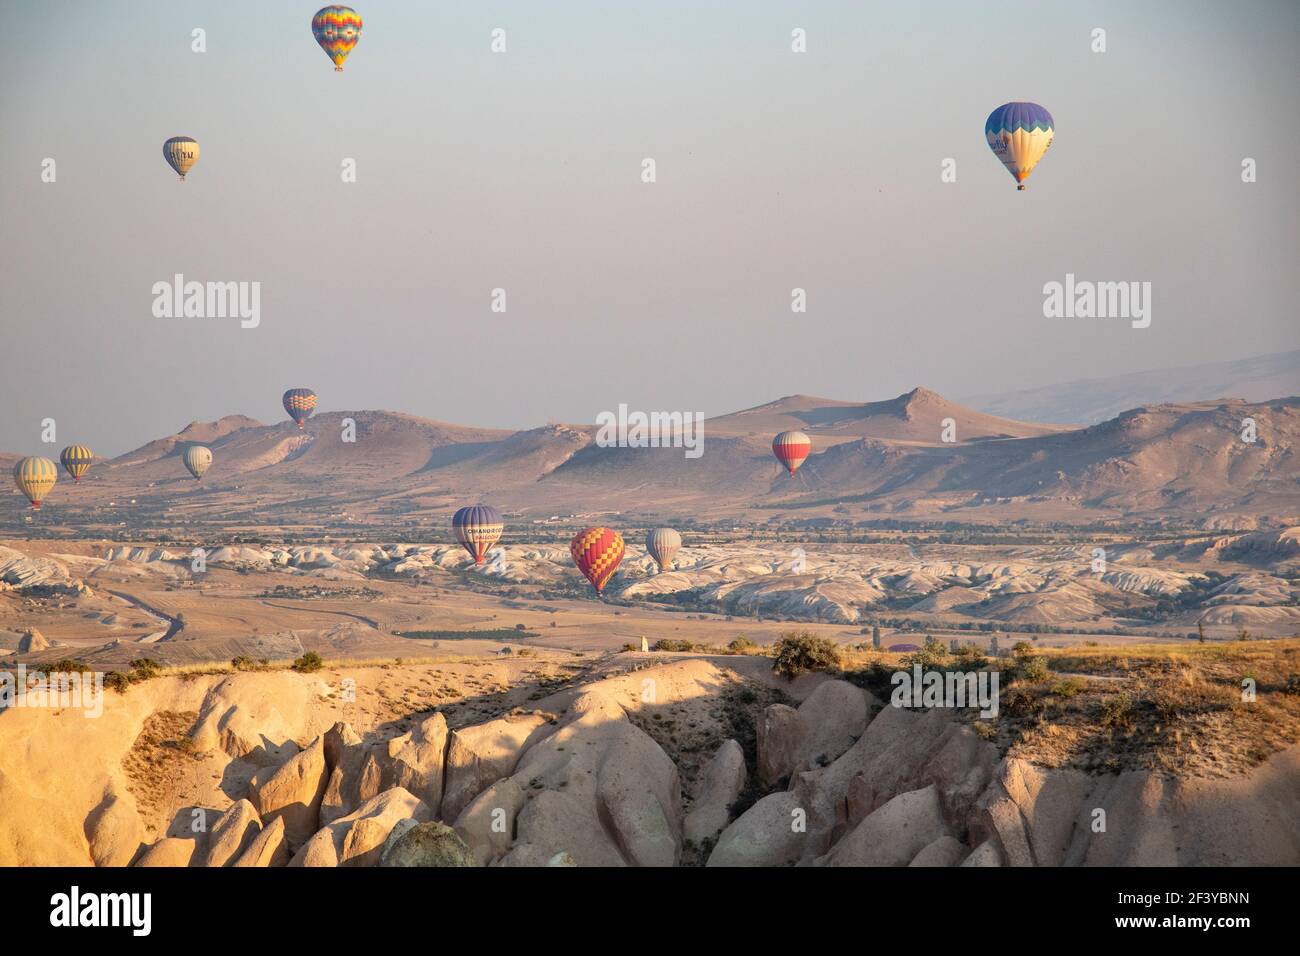 Türkei, Kappadokien, Goreme, 1. August 2019. Bunte Luftballons am Himmel über sandigen Bergen Stockfoto